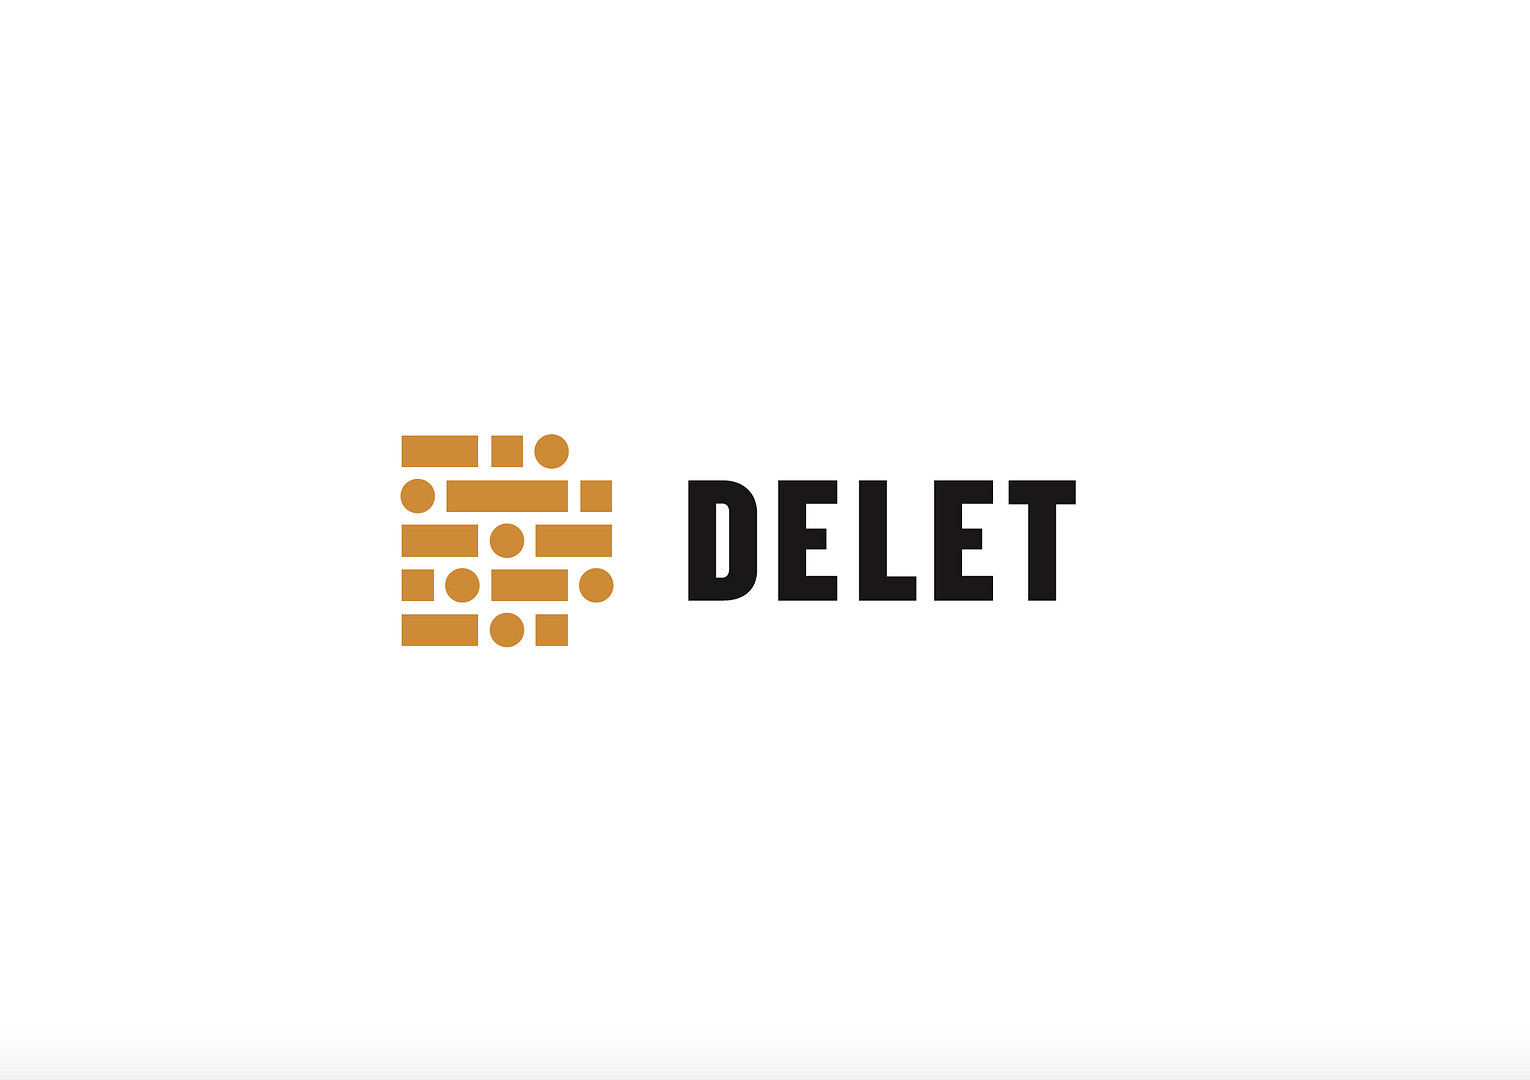 Delet_logo.jpg [72.00 KB]